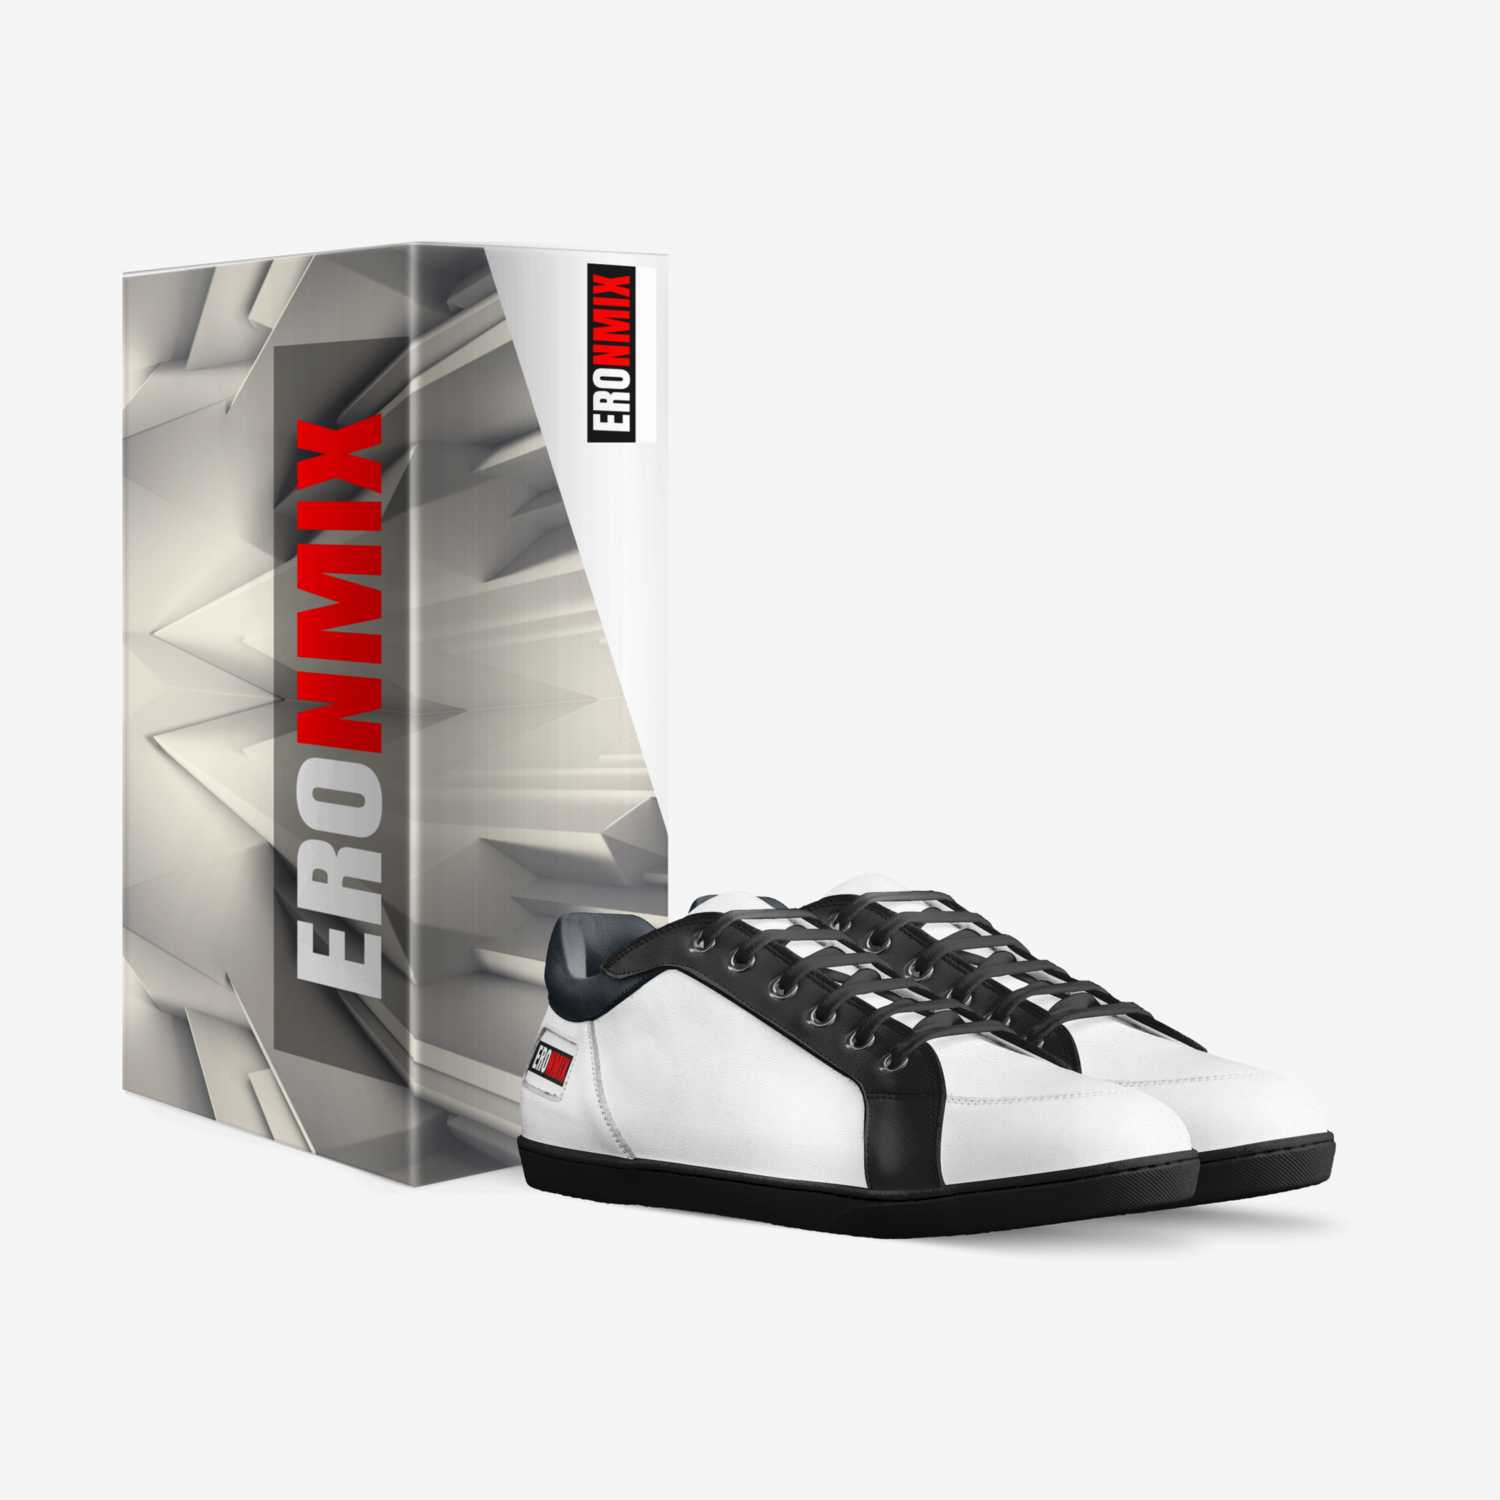 Eronmix M-Blancos custom made in Italy shoes by Eduardo Ramirez | Box view